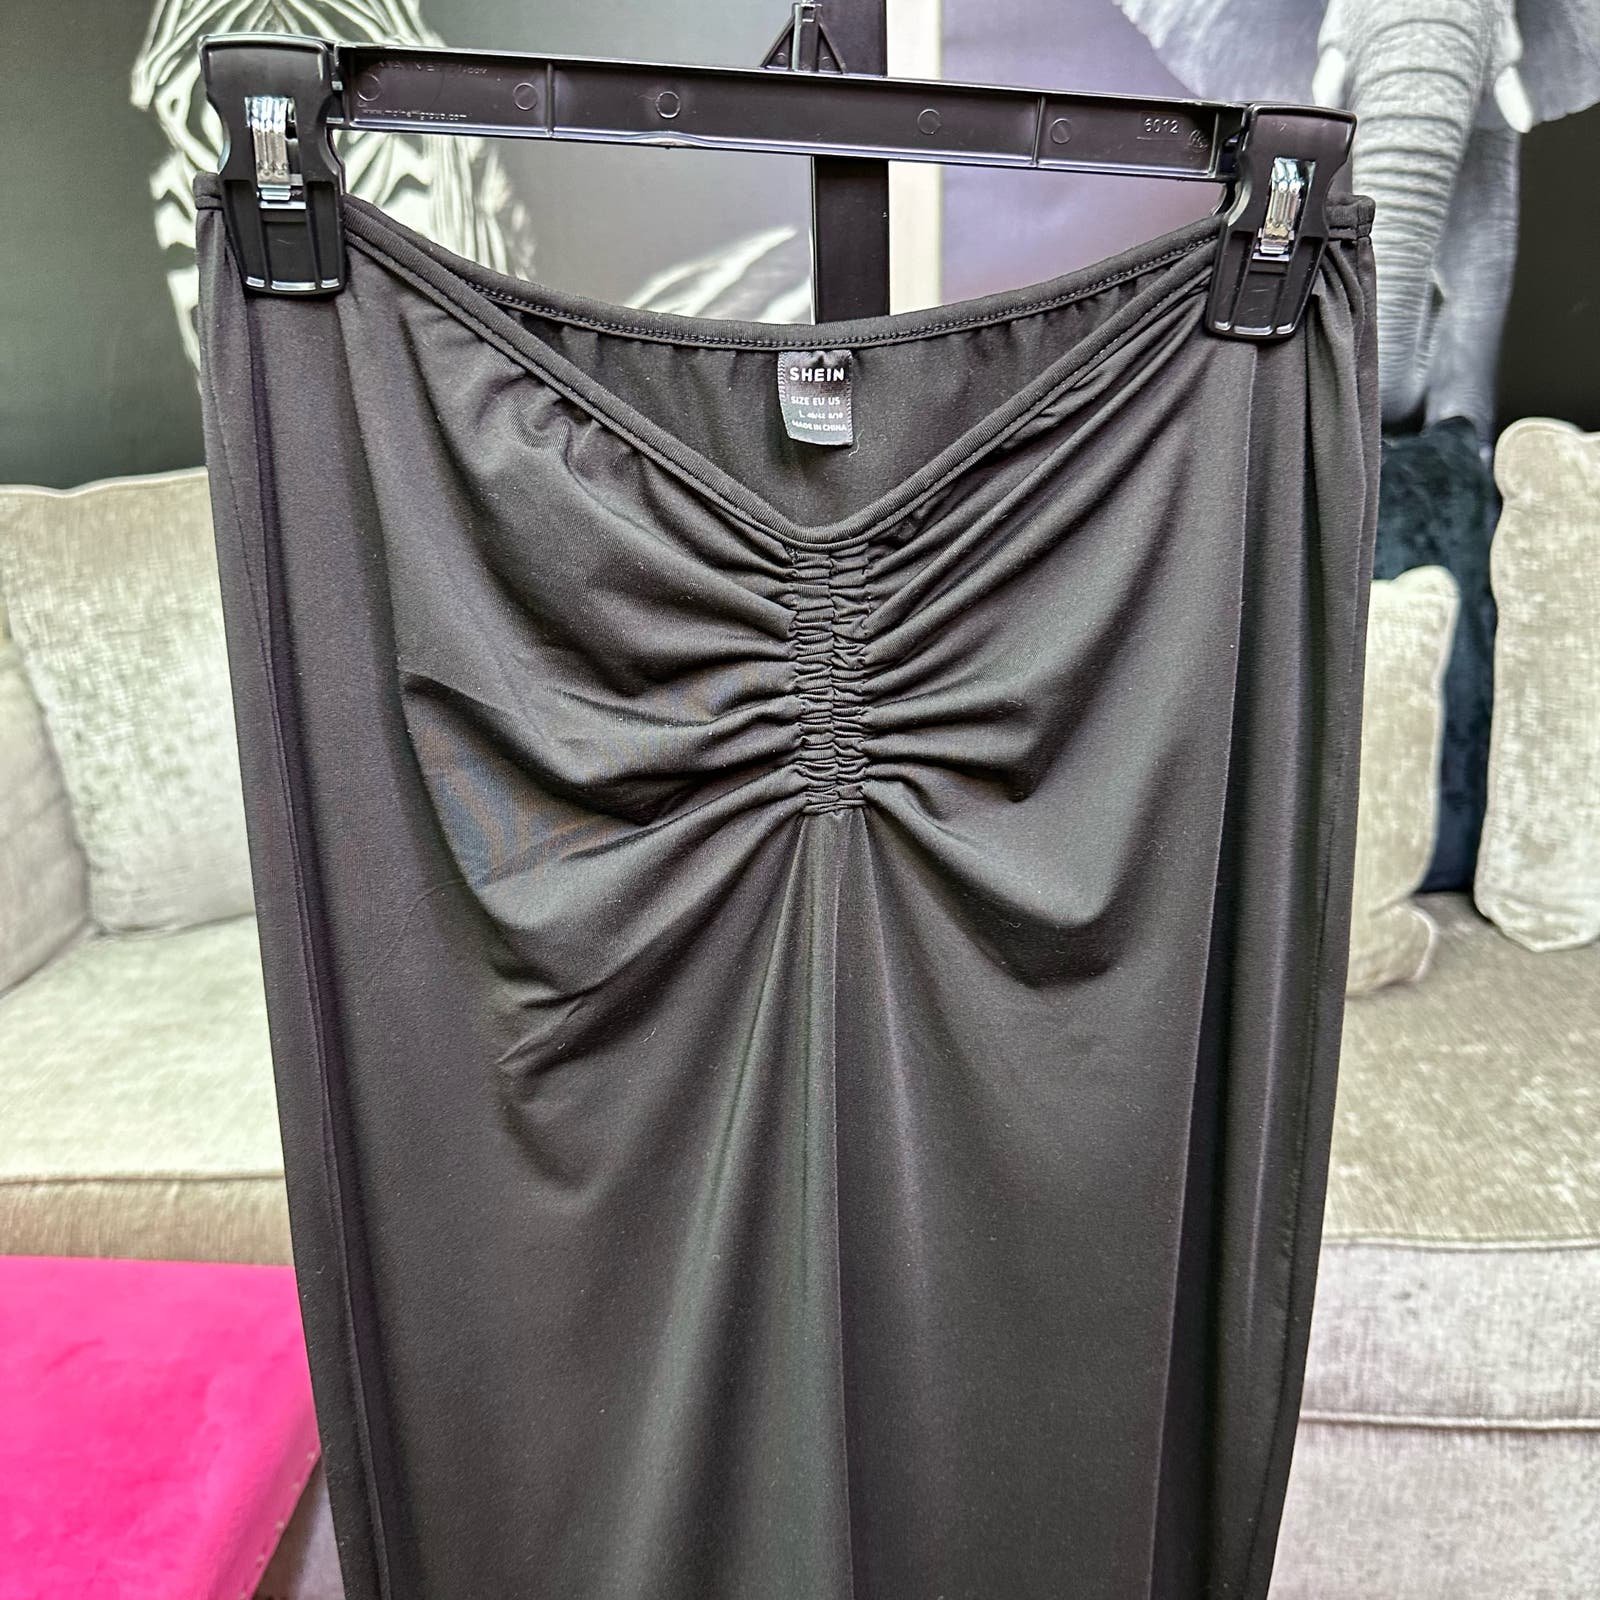 Personality Shein Women Size L Black Skirt jRiTt8H7v Fashion